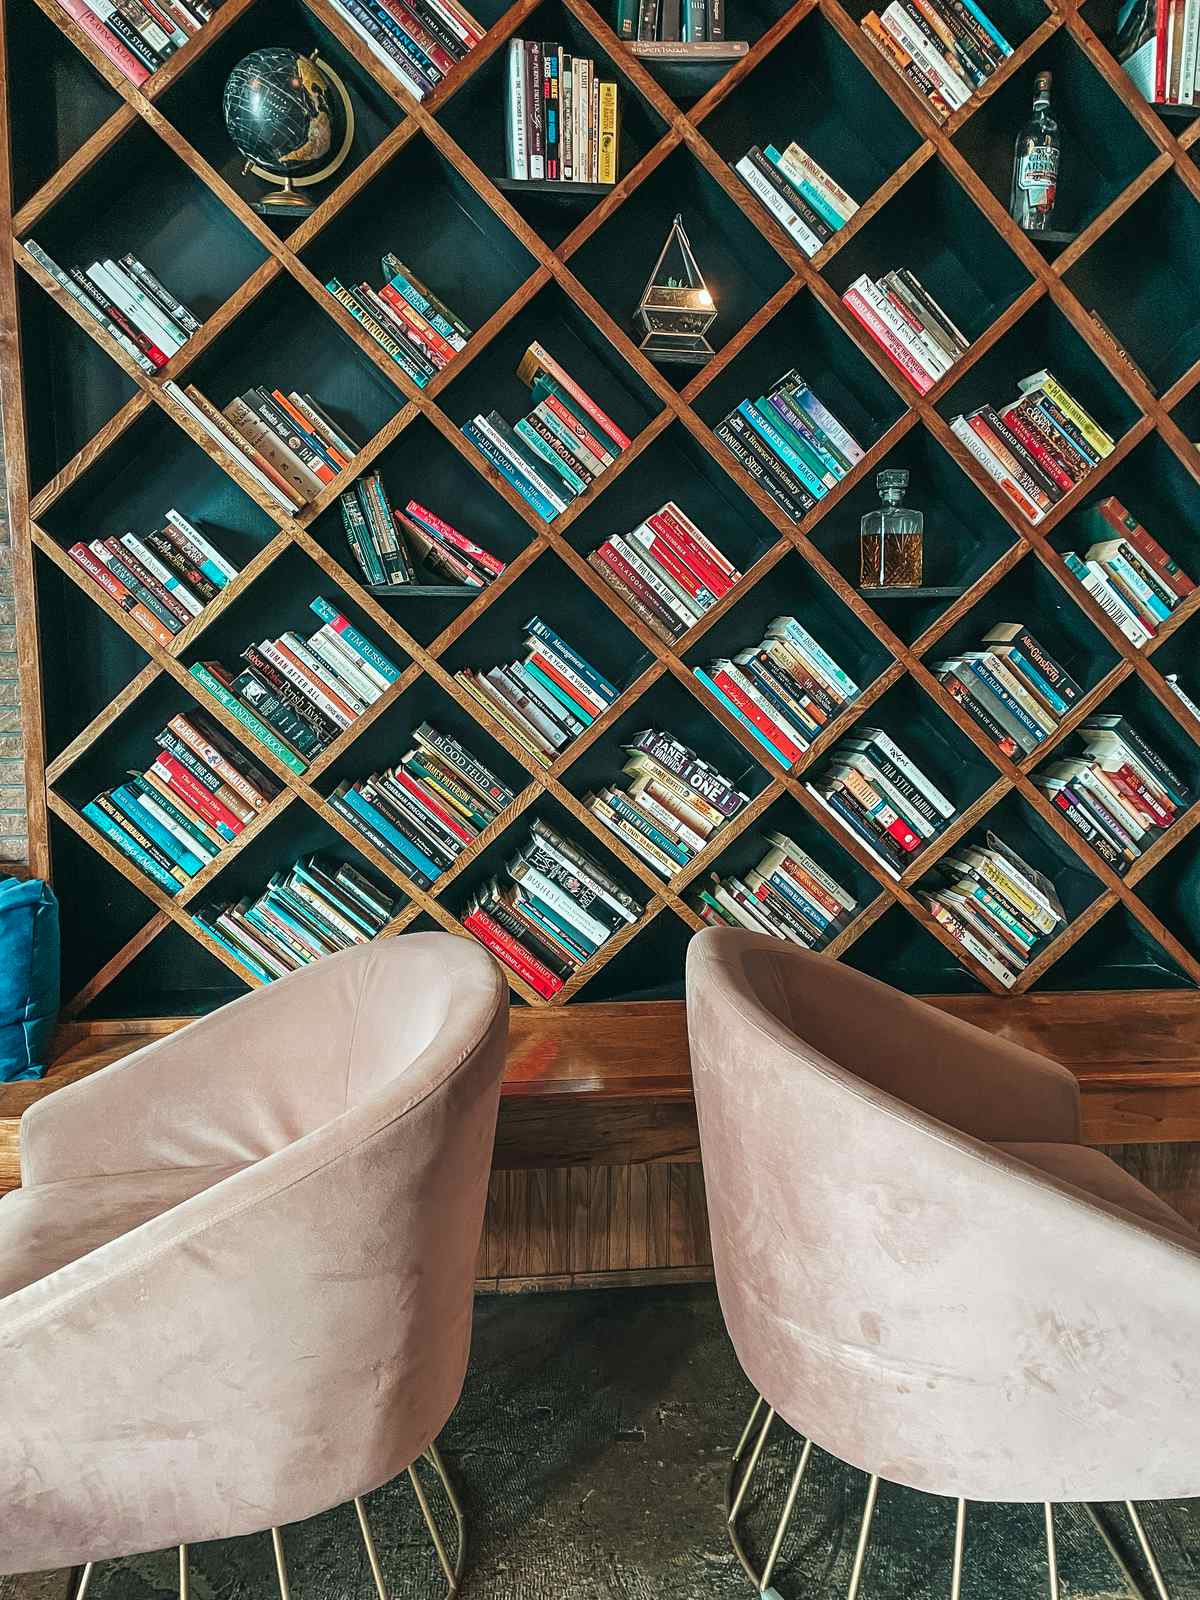 Bookshelves and seating at Revival craft bar in Lakeland